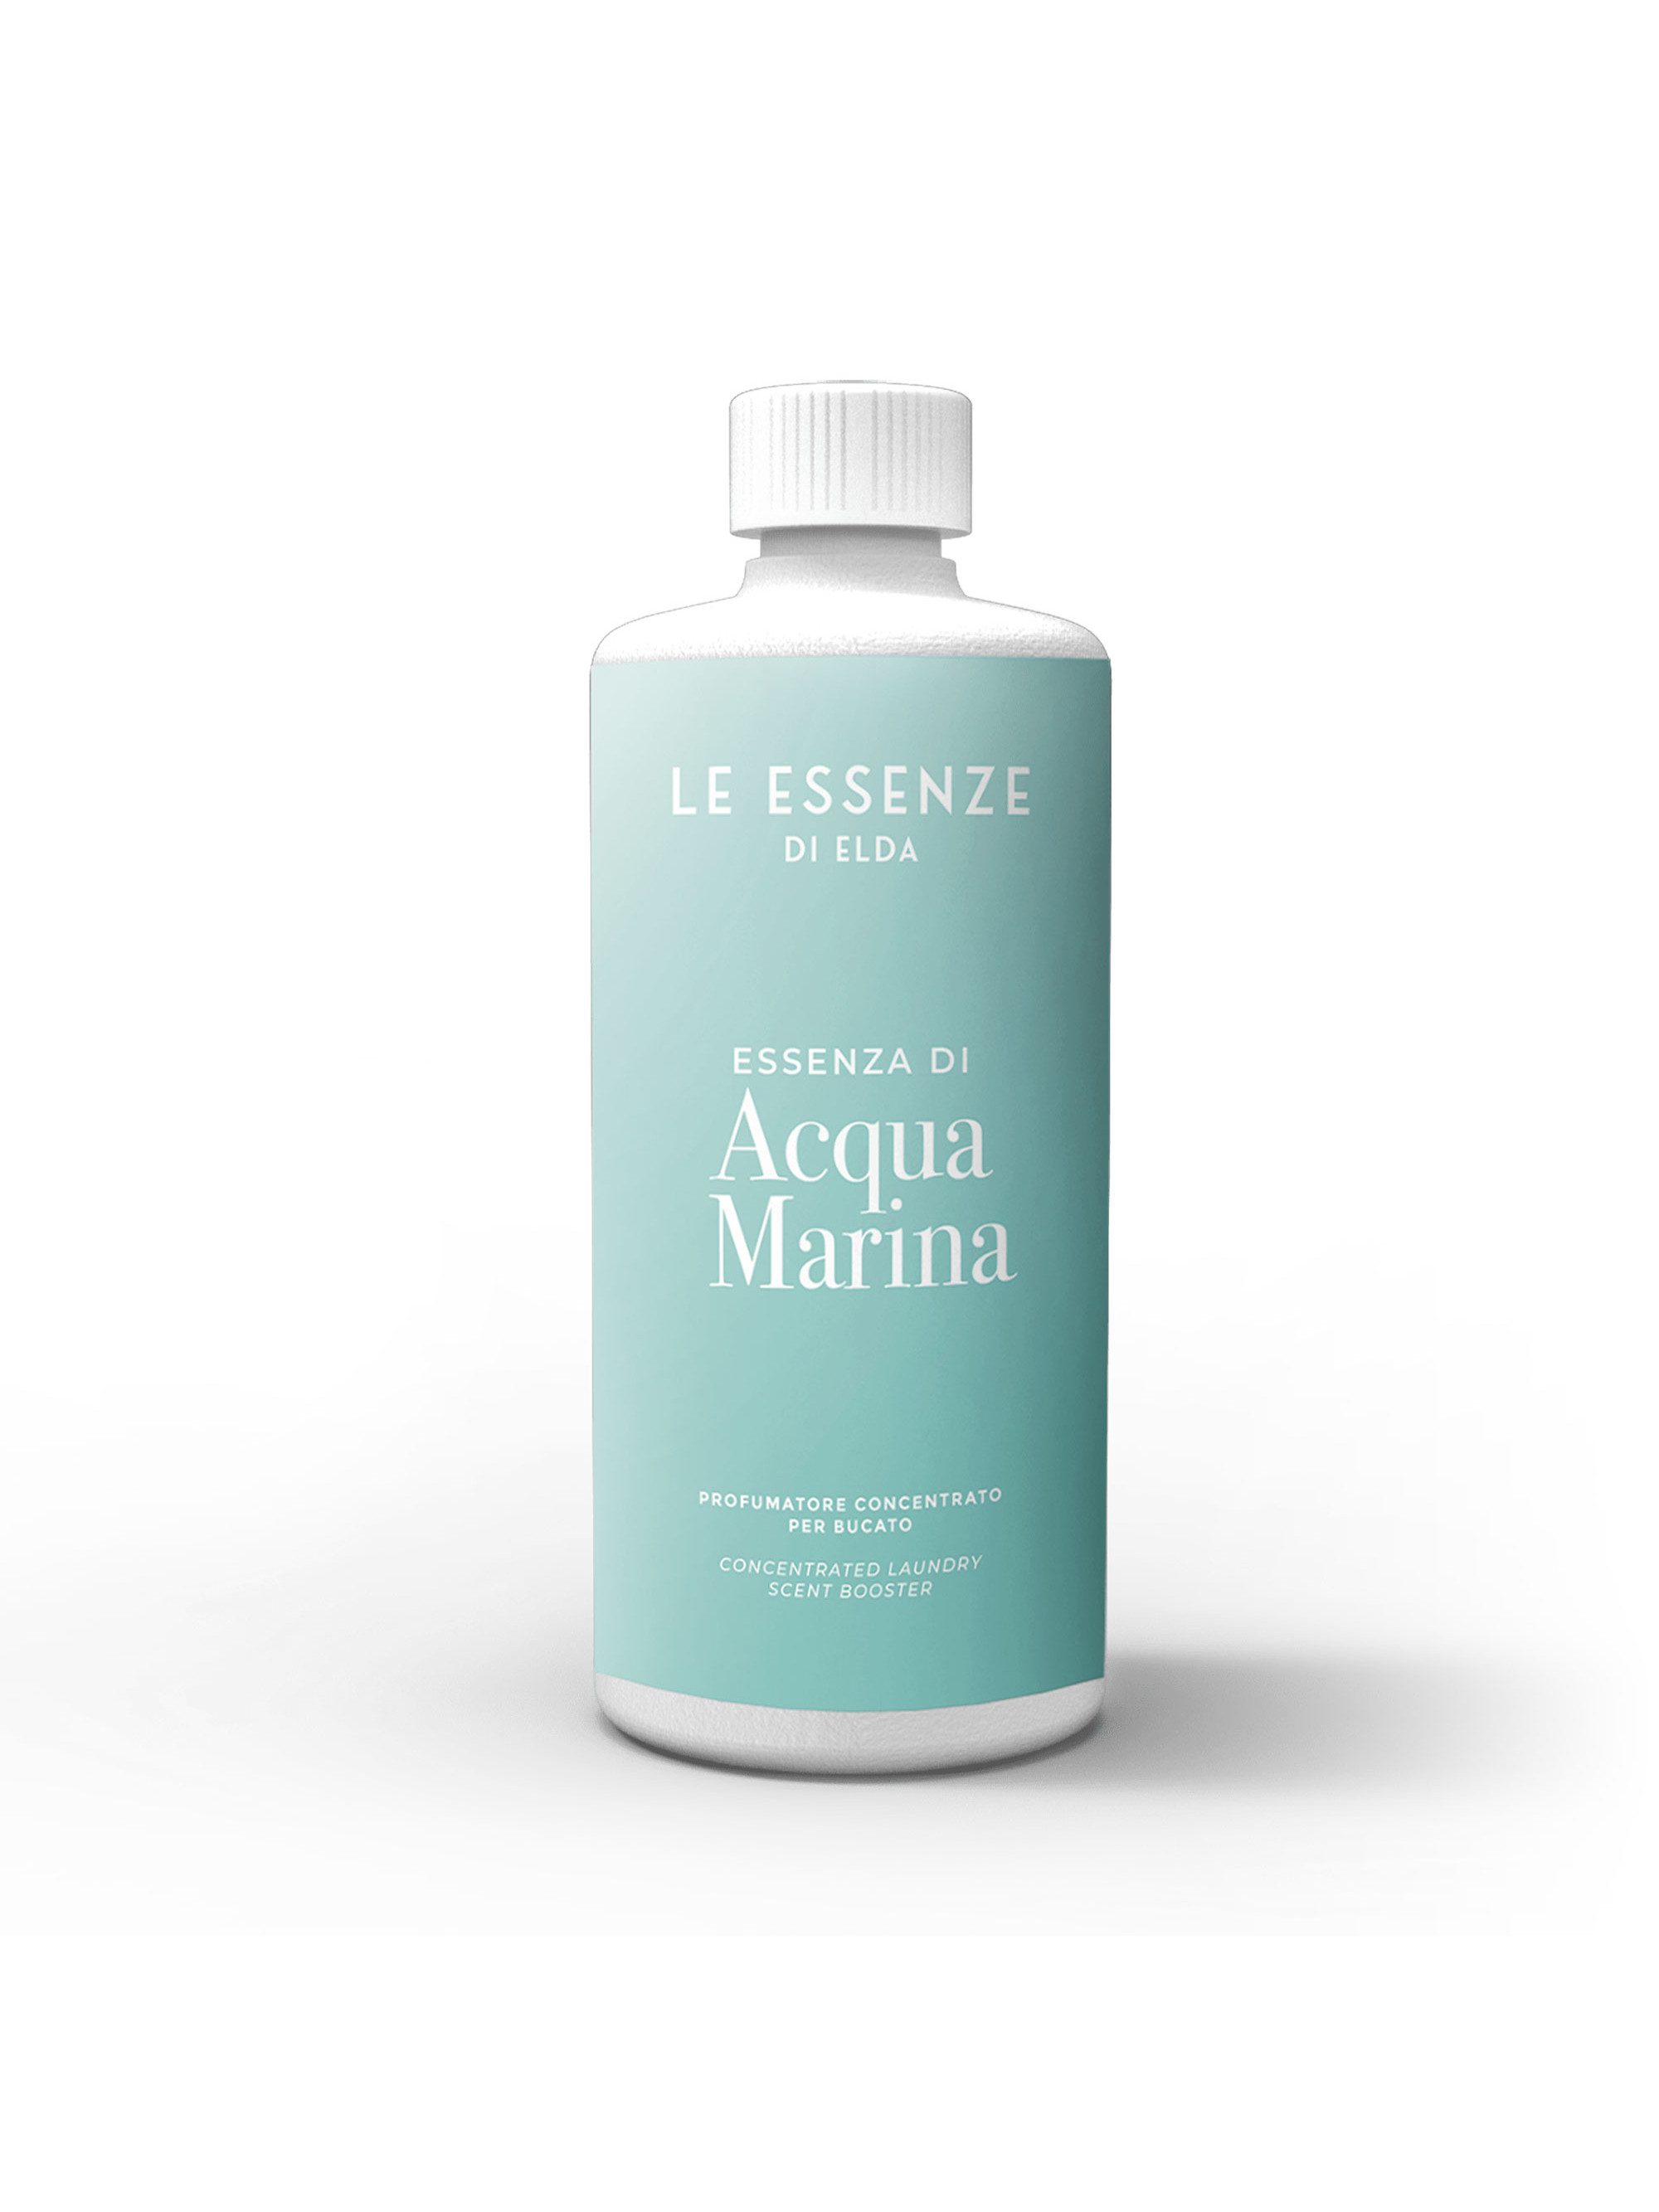 Essenza Acqua Marina - 500ml laundry perfumer